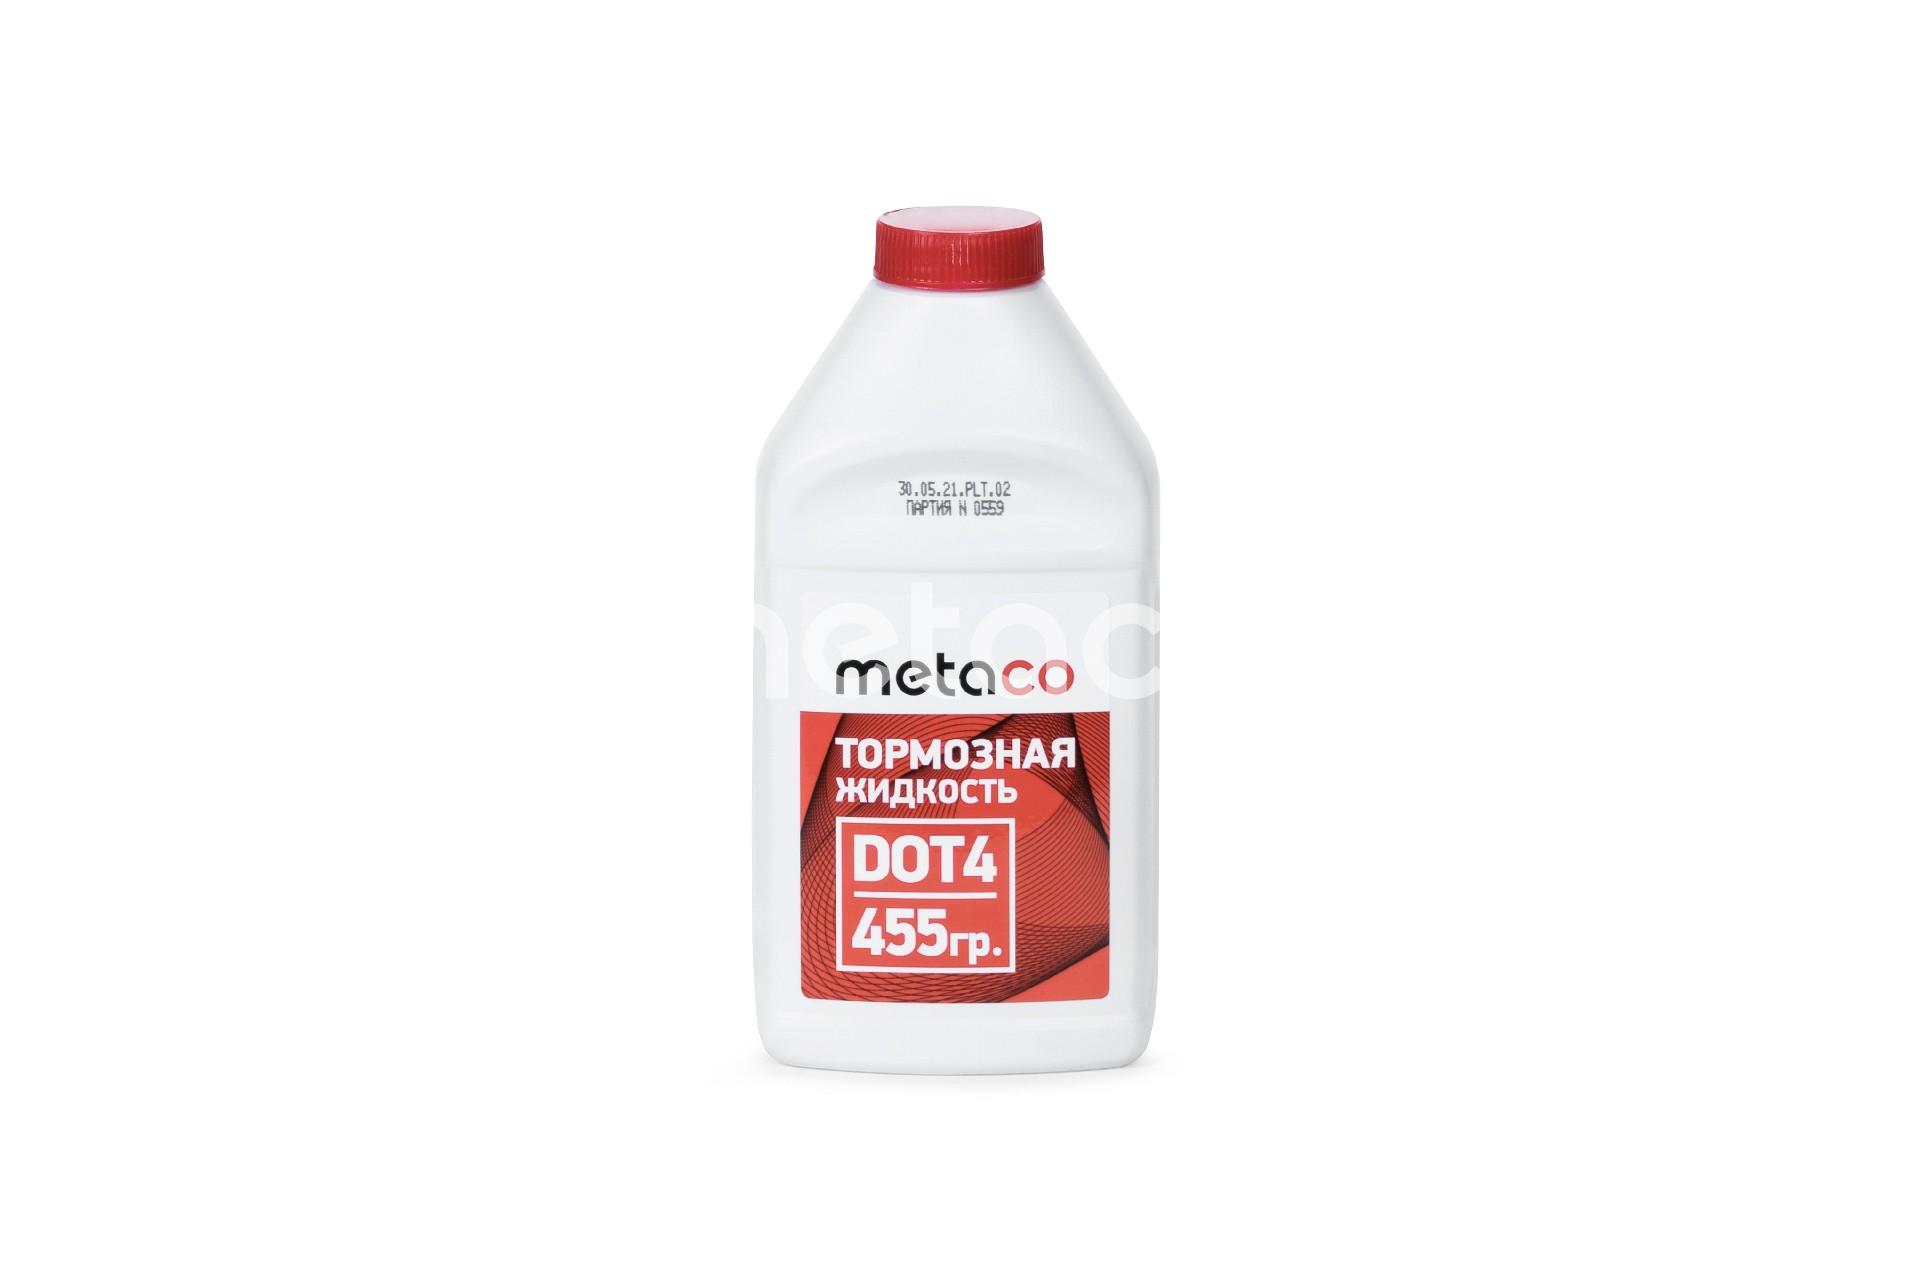 Metaco Жидкость тормозная DOT-4 455 гр. 9982001 EAN: 4606532012847